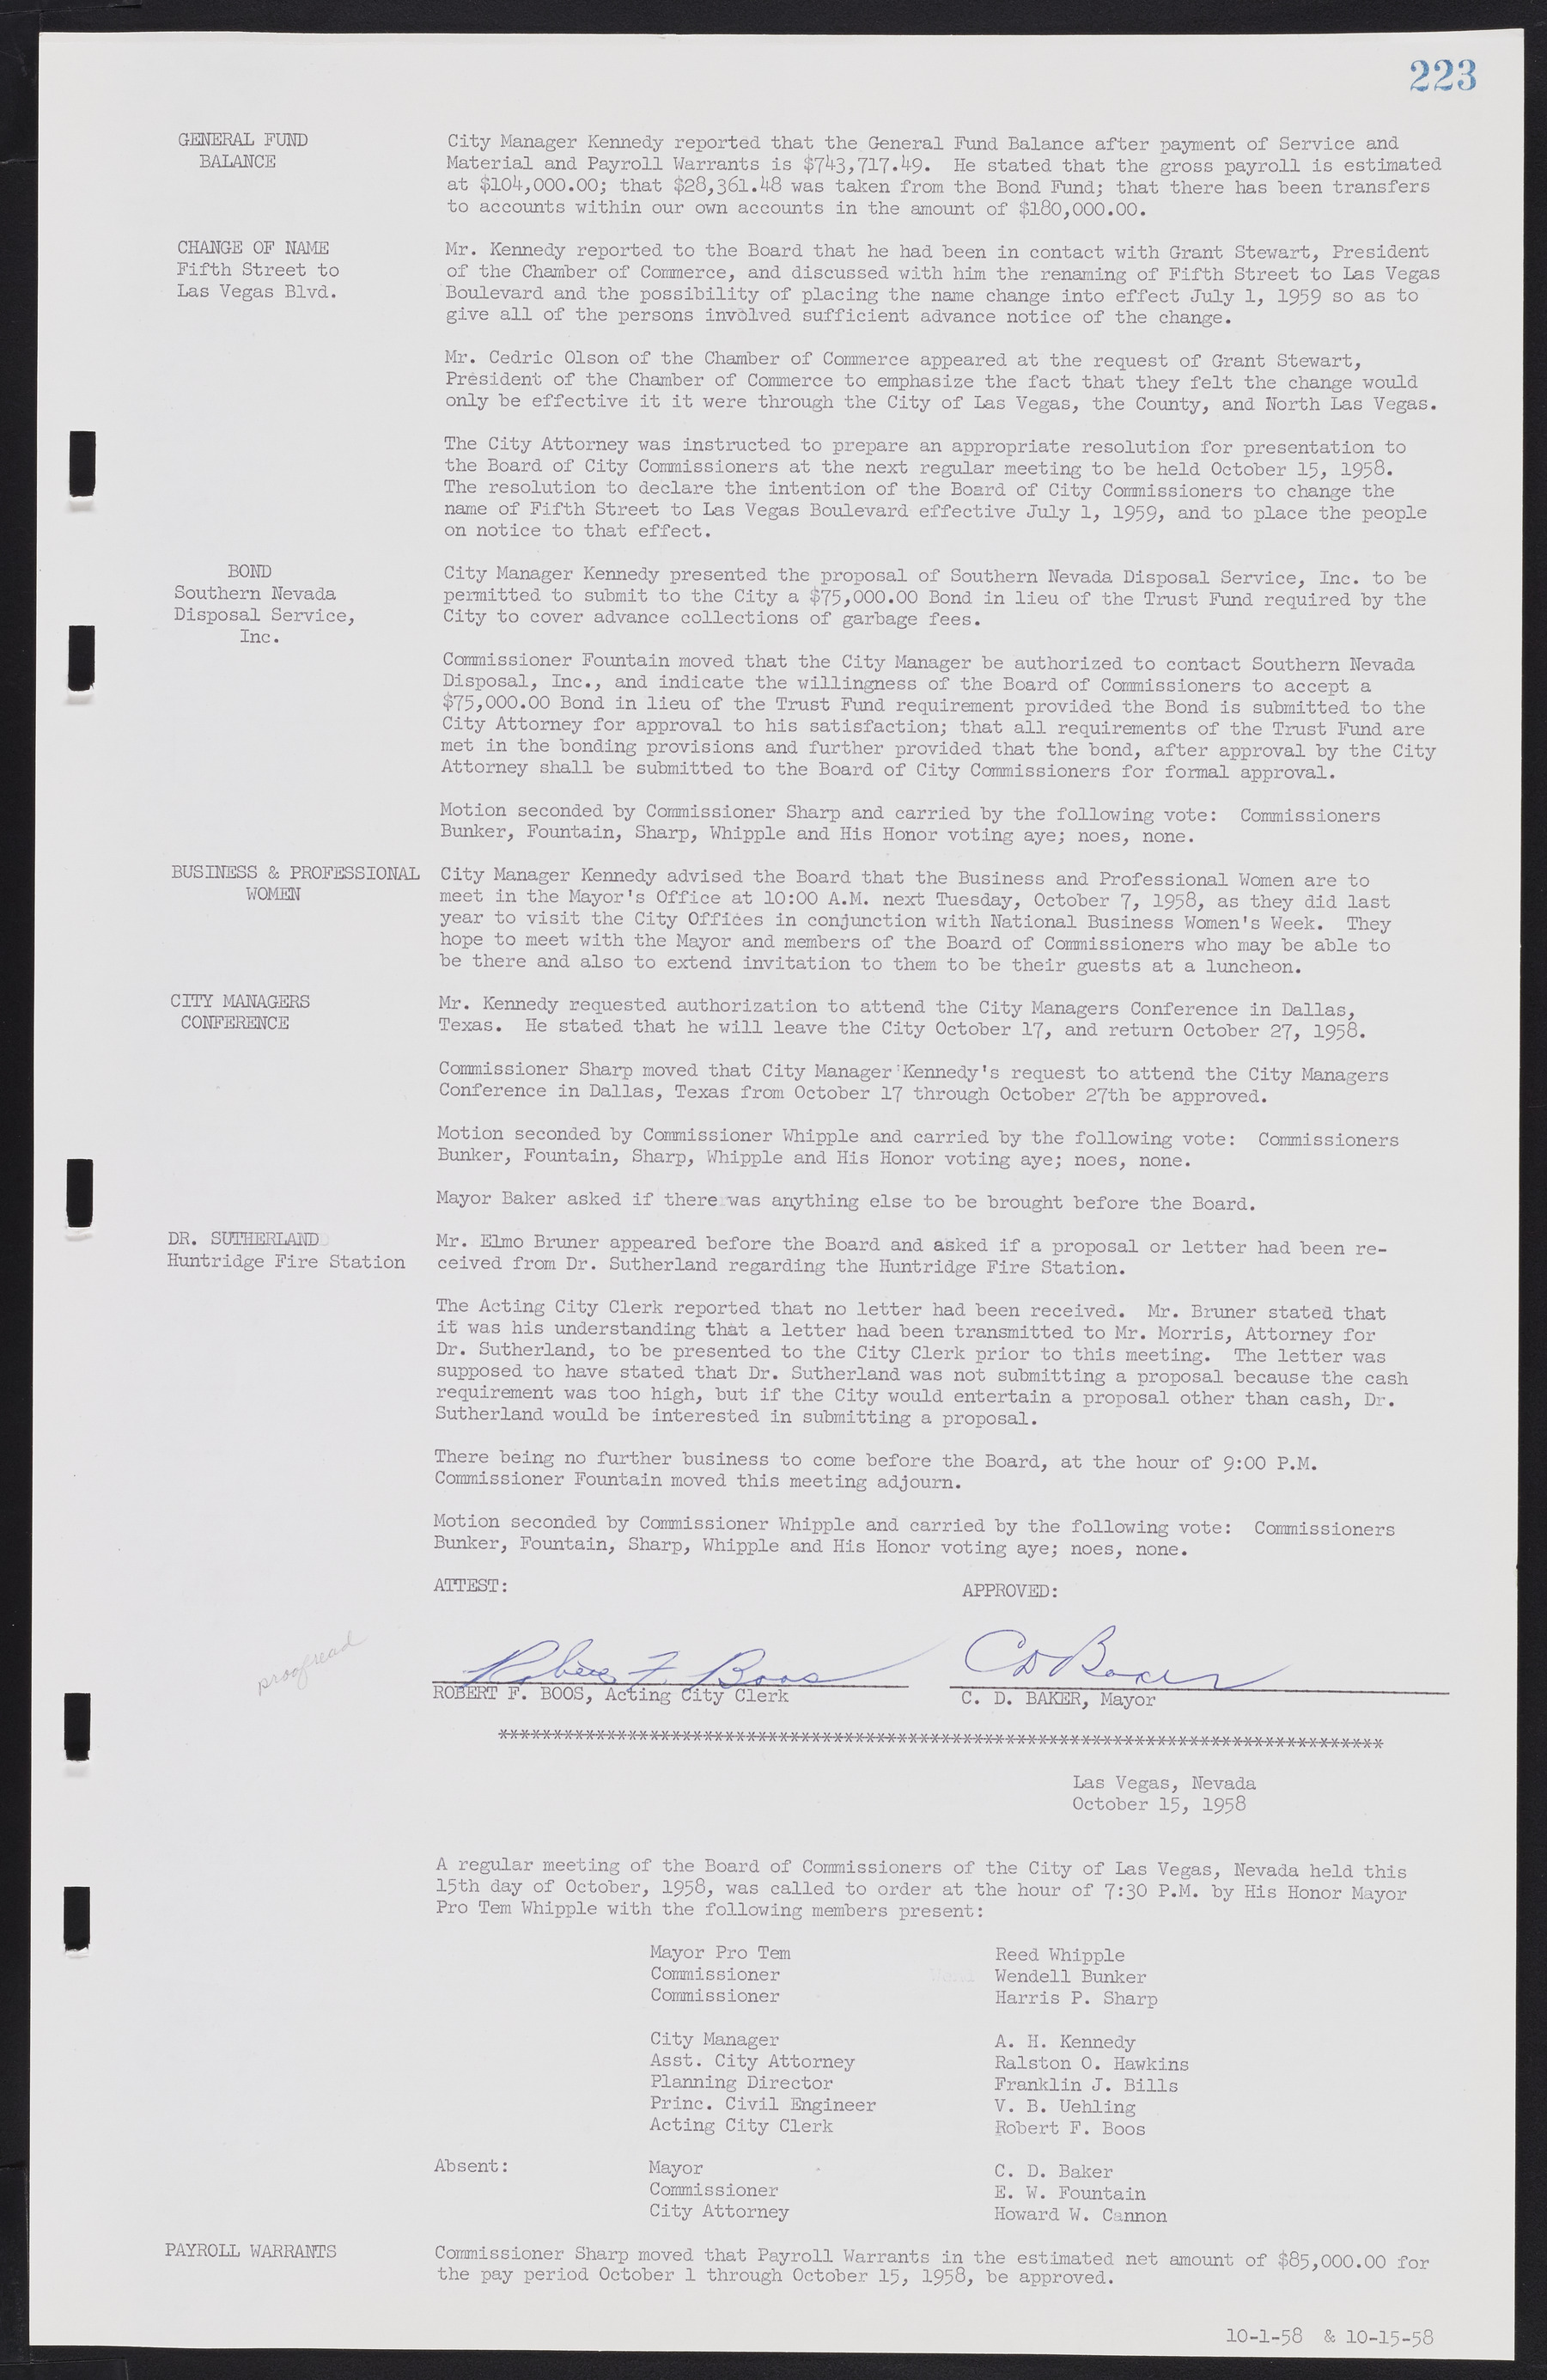 Las Vegas City Commission Minutes, November 20, 1957 to December 2, 1959, lvc000011-229